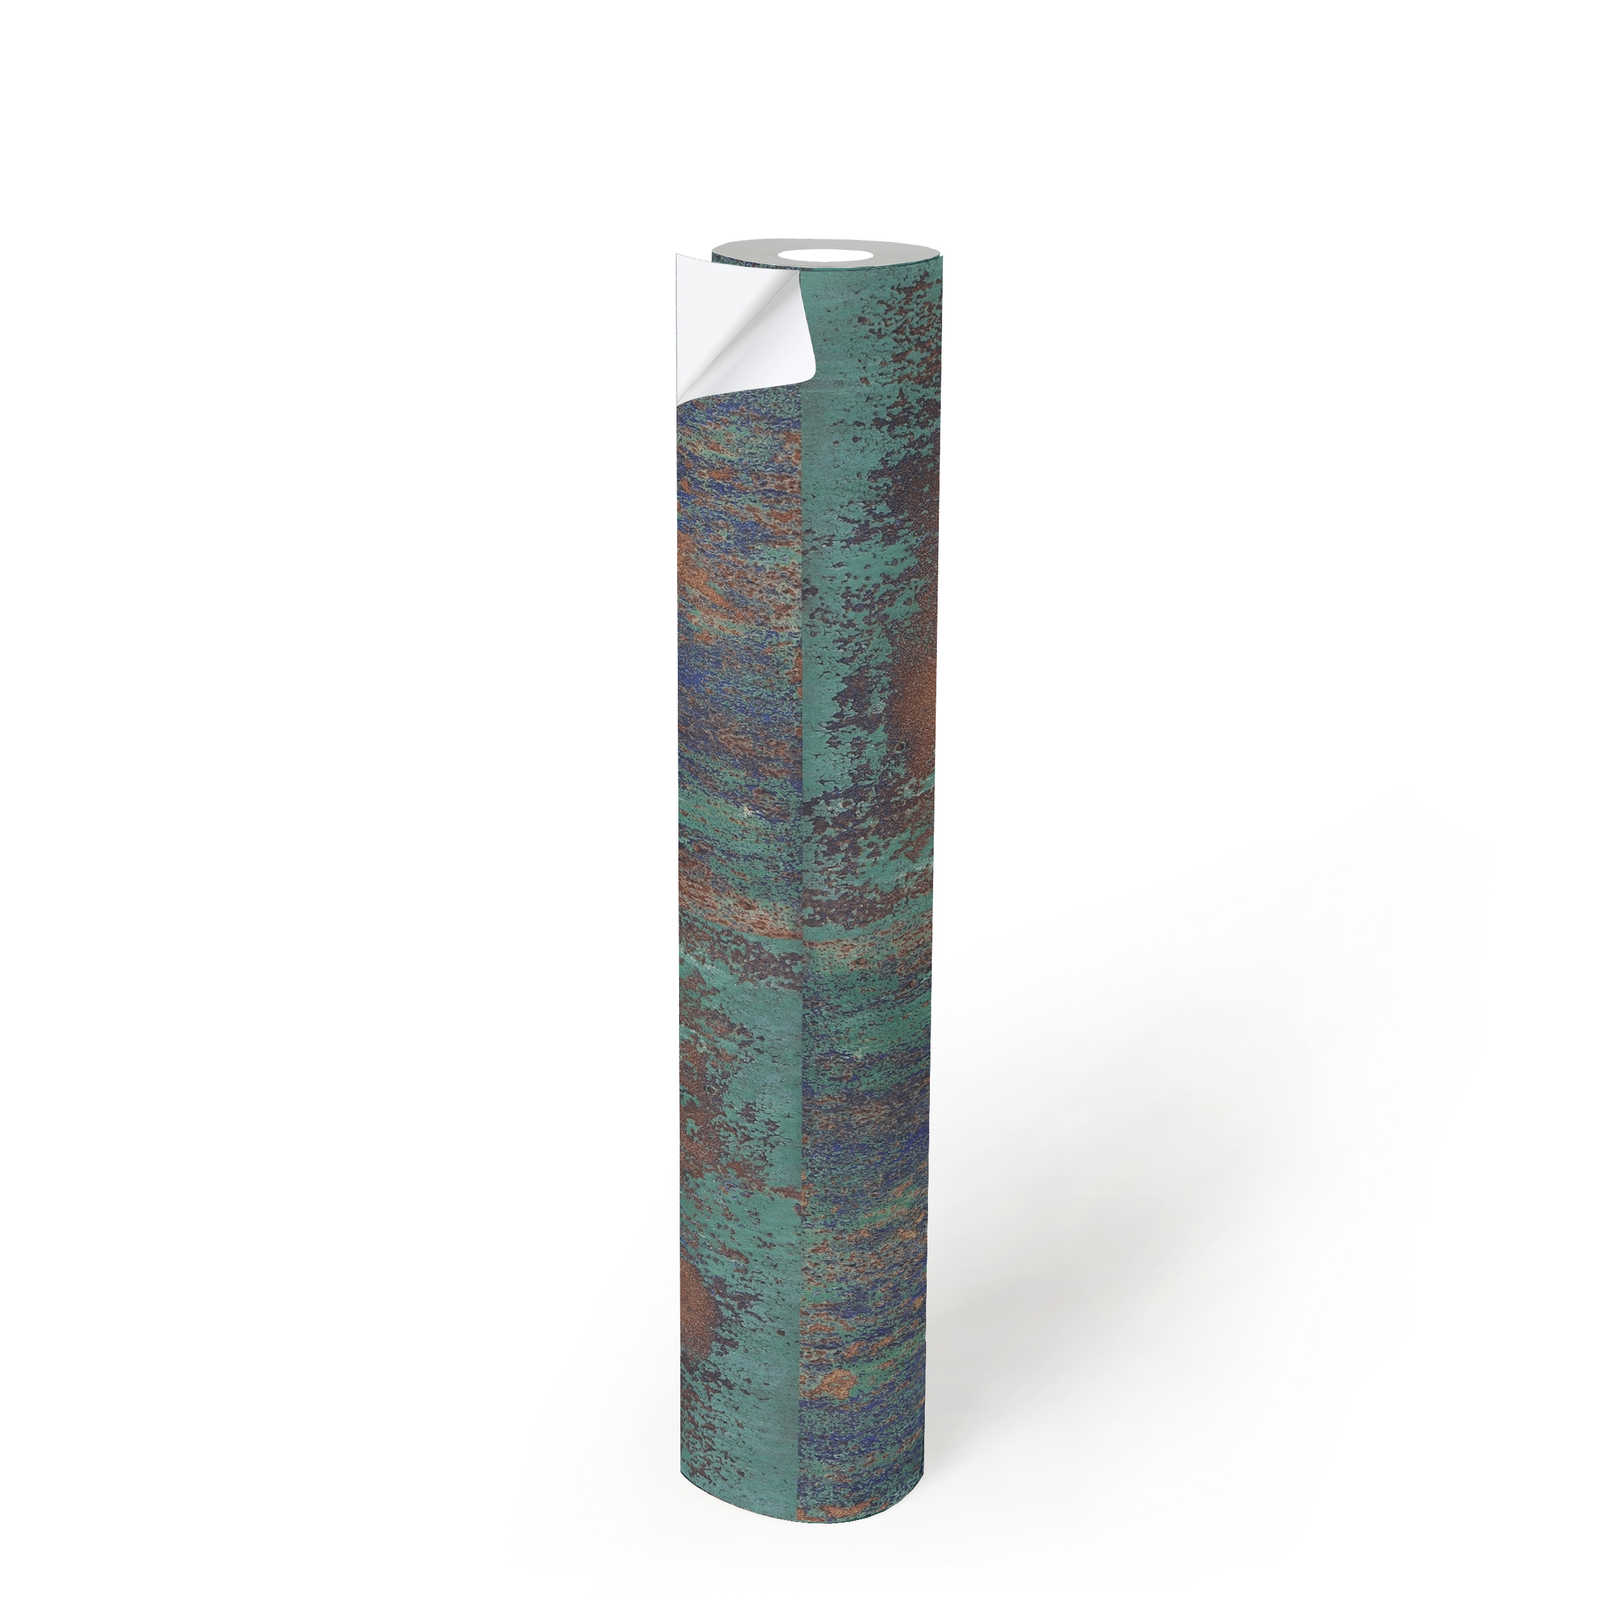             Papel pintado autoadhesivo | diseño de aspecto oxidado metal rústico - azul, marrón
        